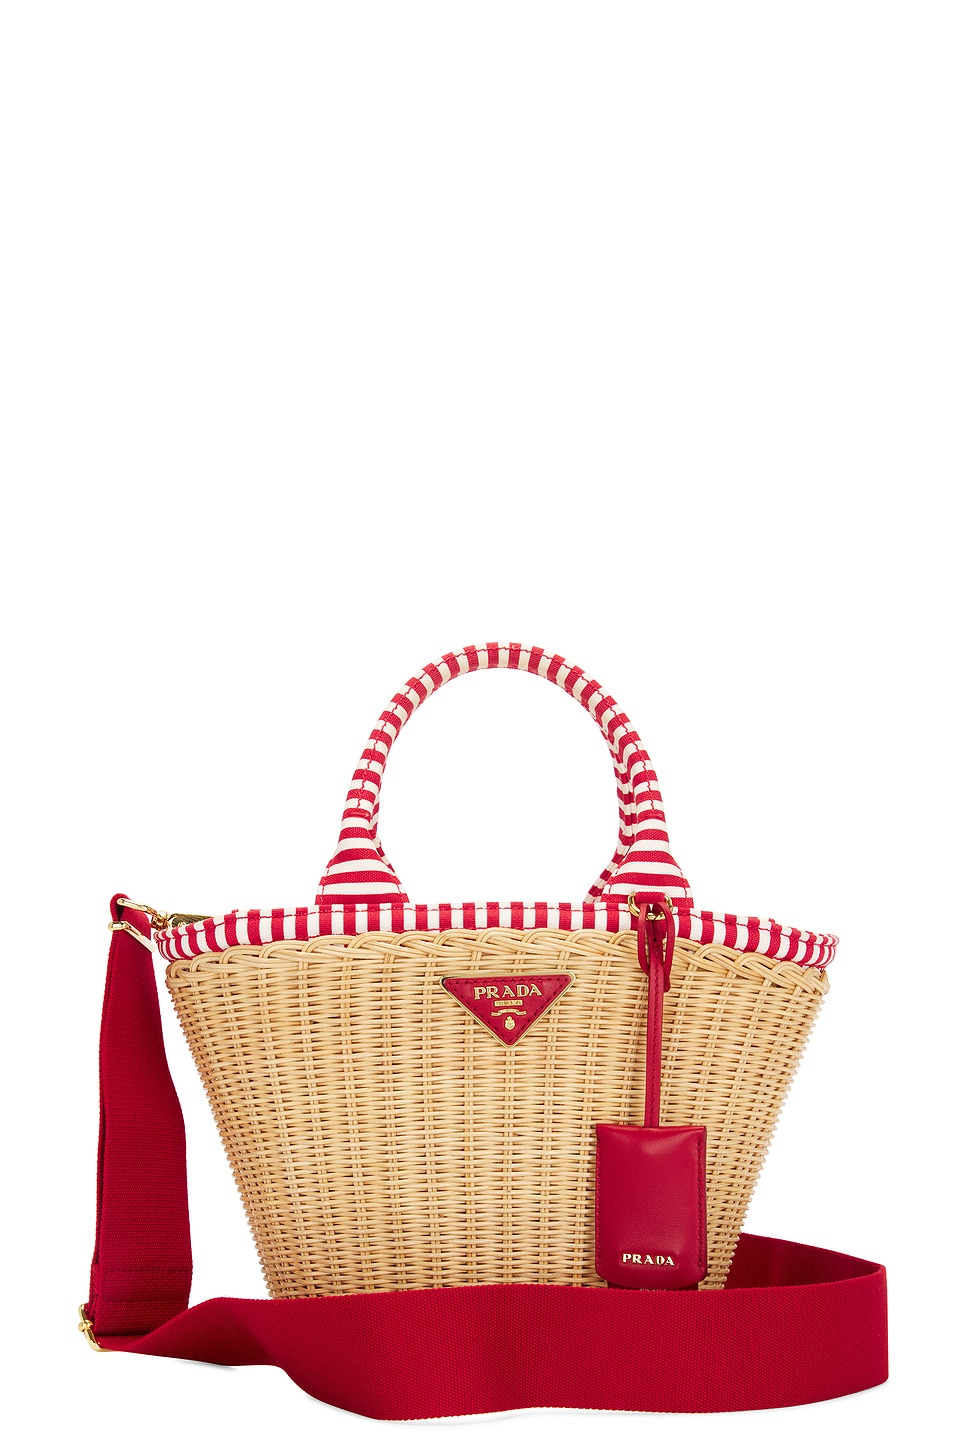 Prada Straw 2 Way Handbag In Red